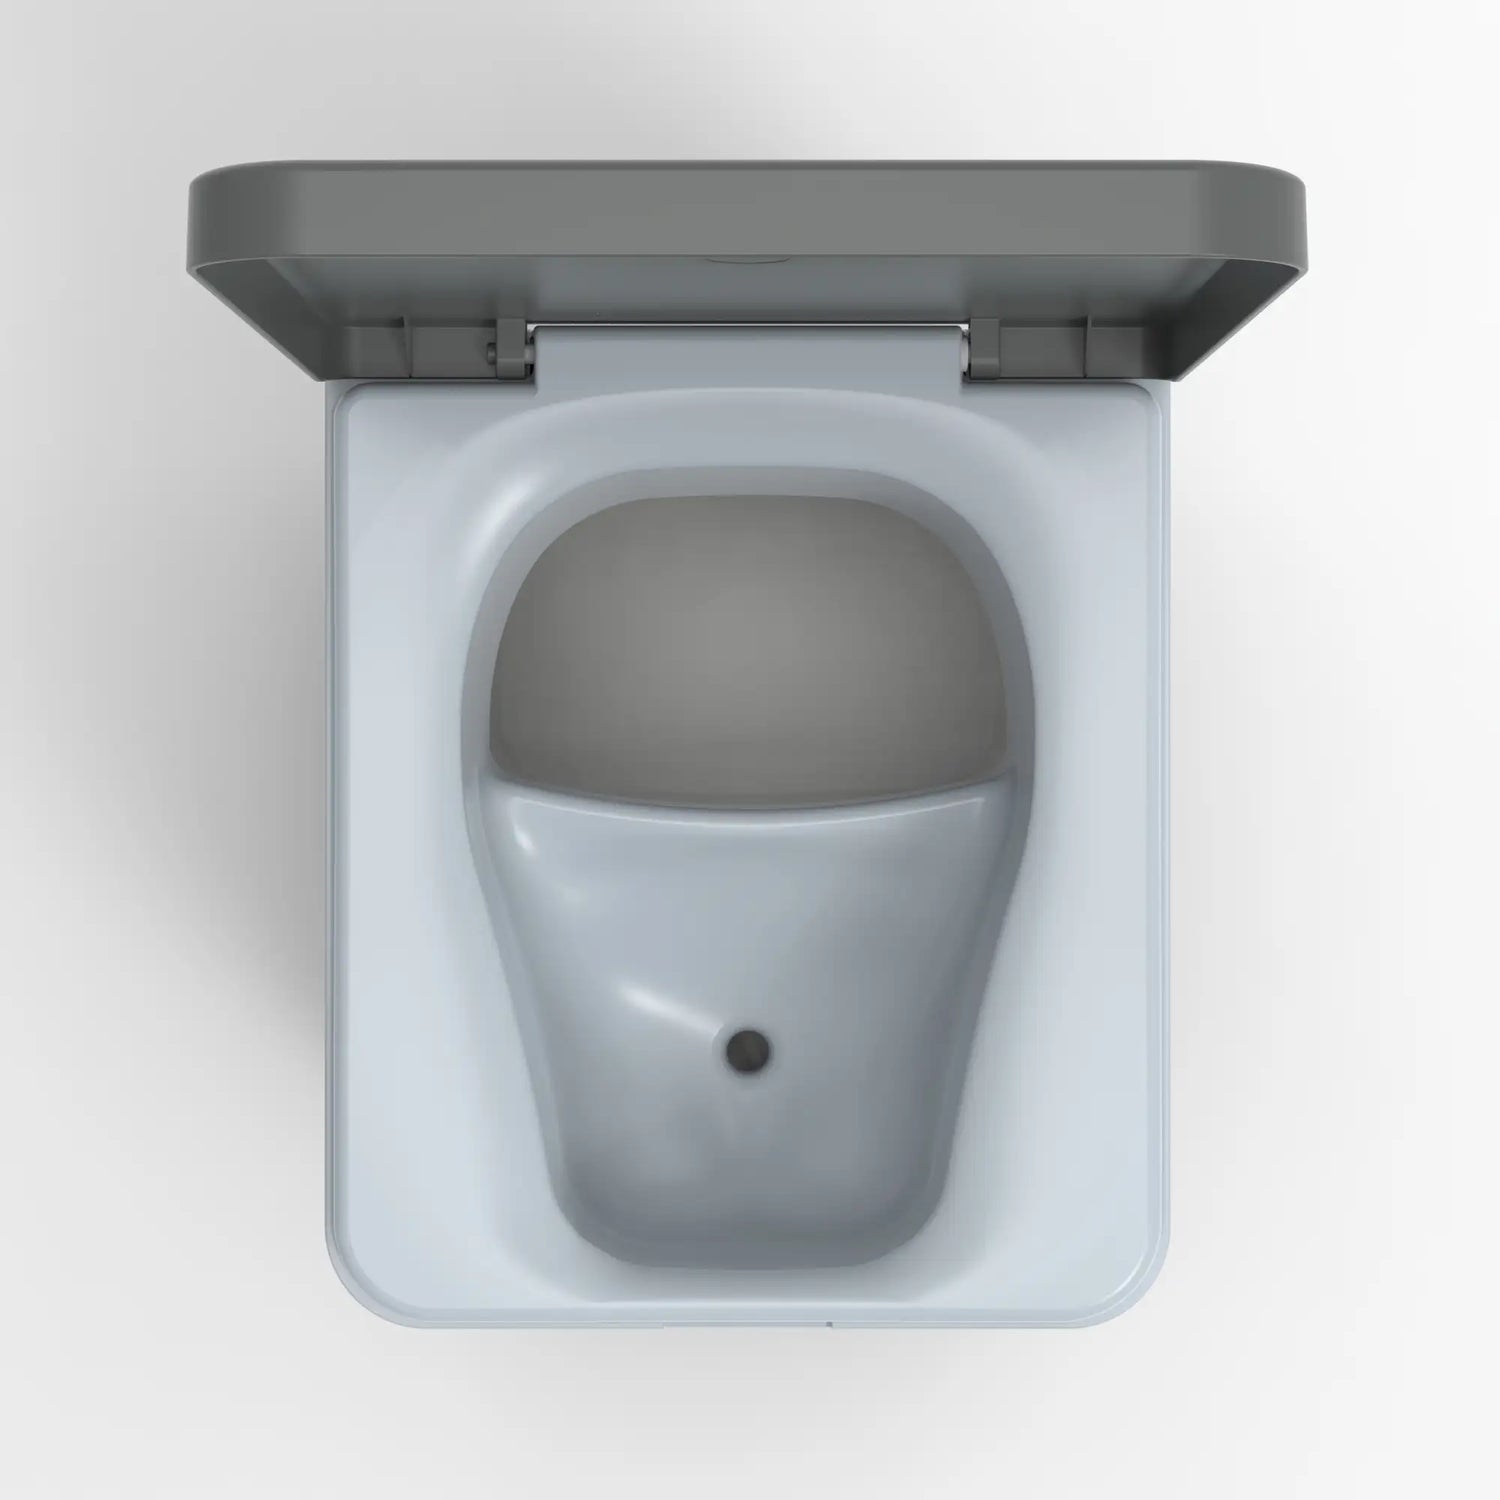 Trelino® Evo separation toilet